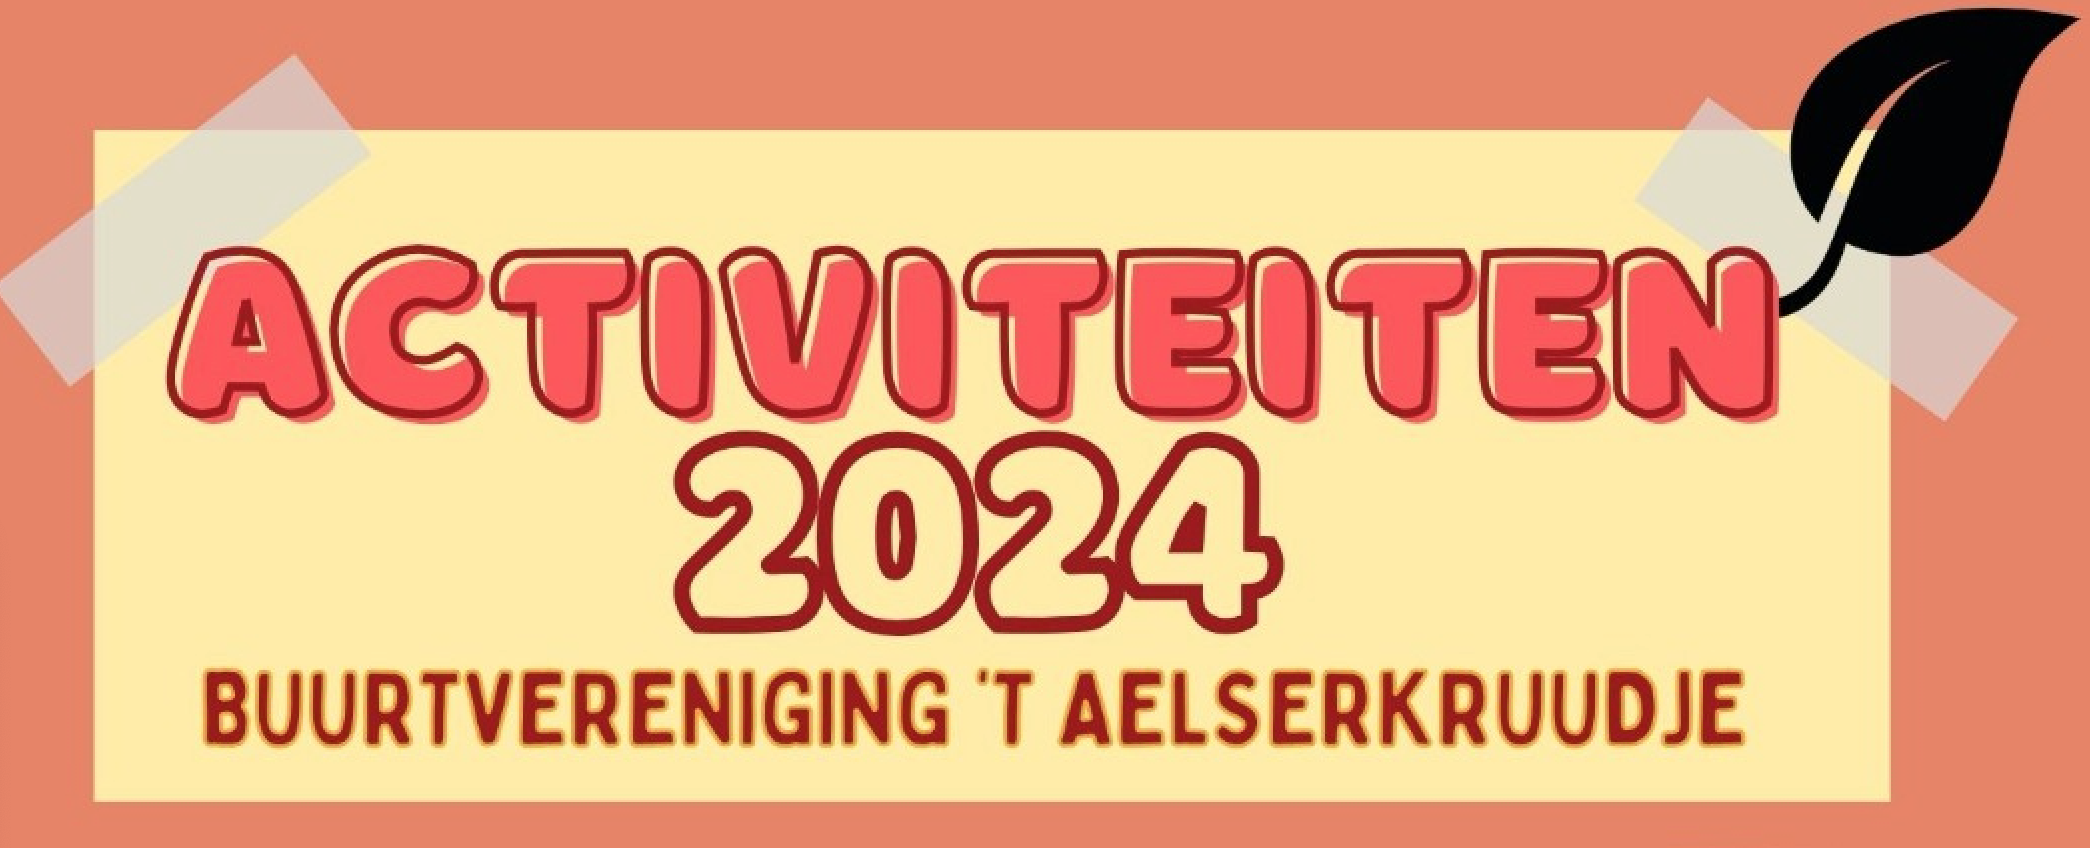 Activiteiten buurtvereniging 2024